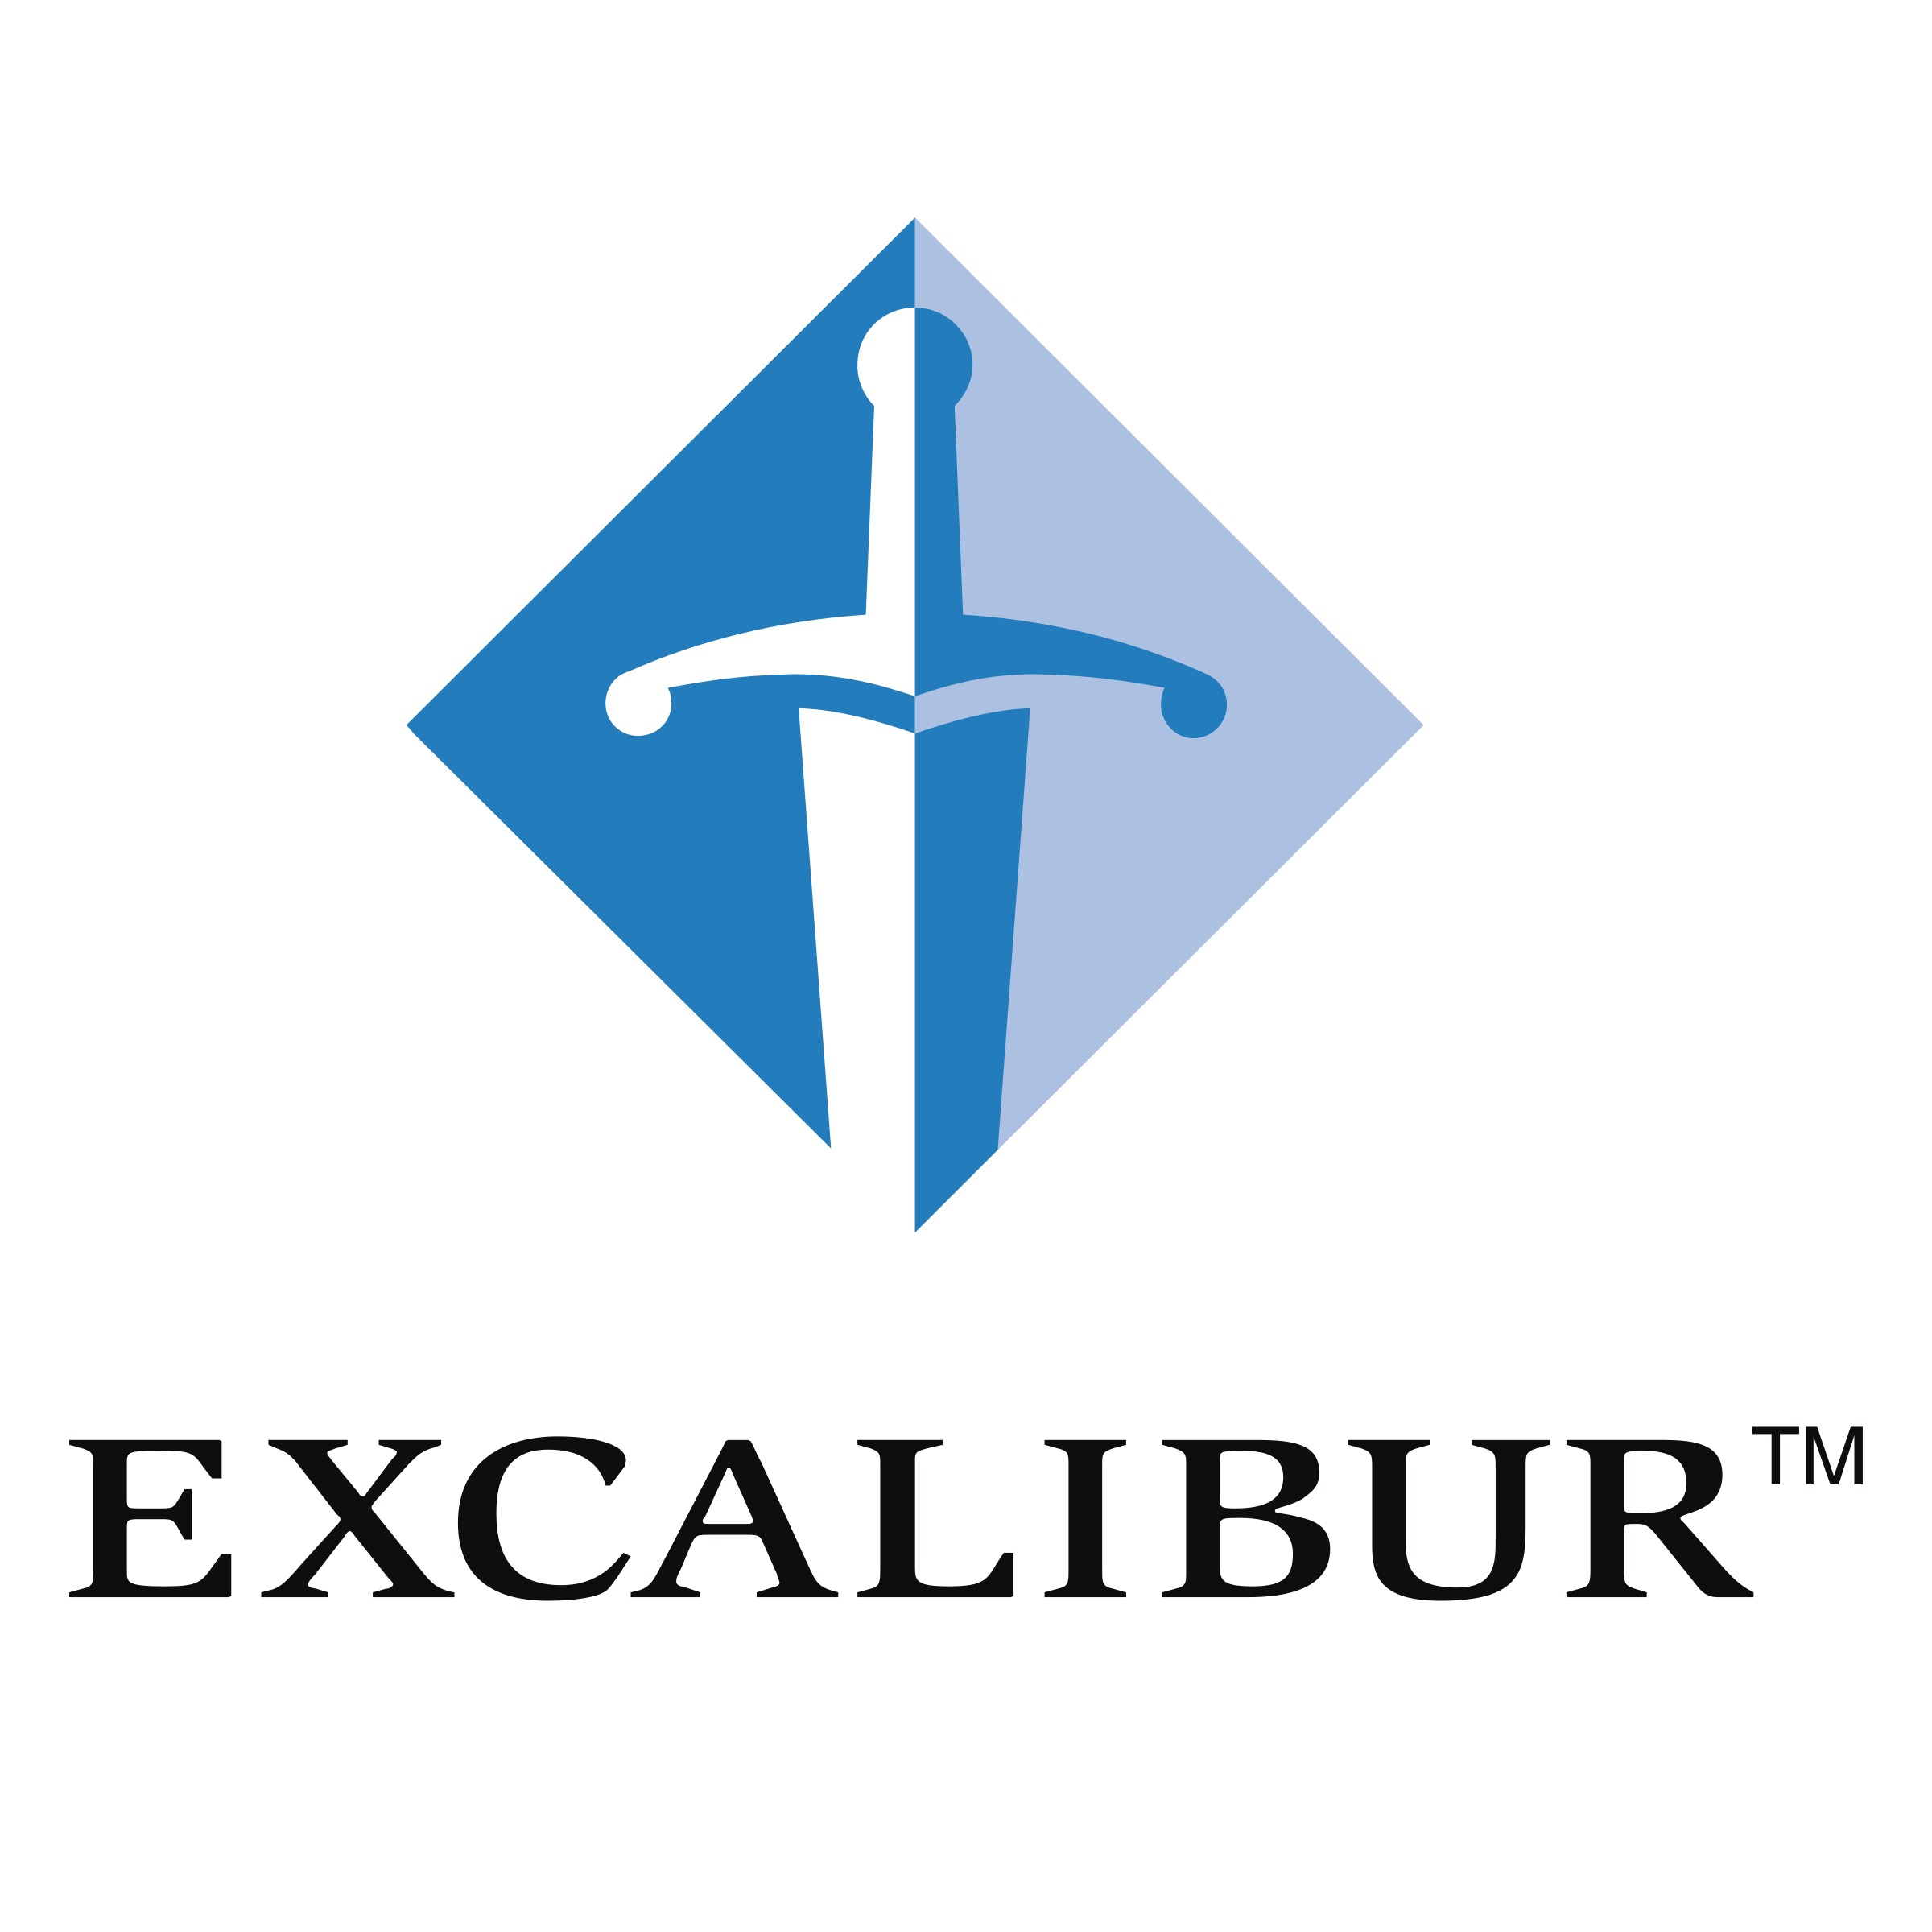 Excalibur Logo - Excalibur Logo PNG Transparent & SVG Vector